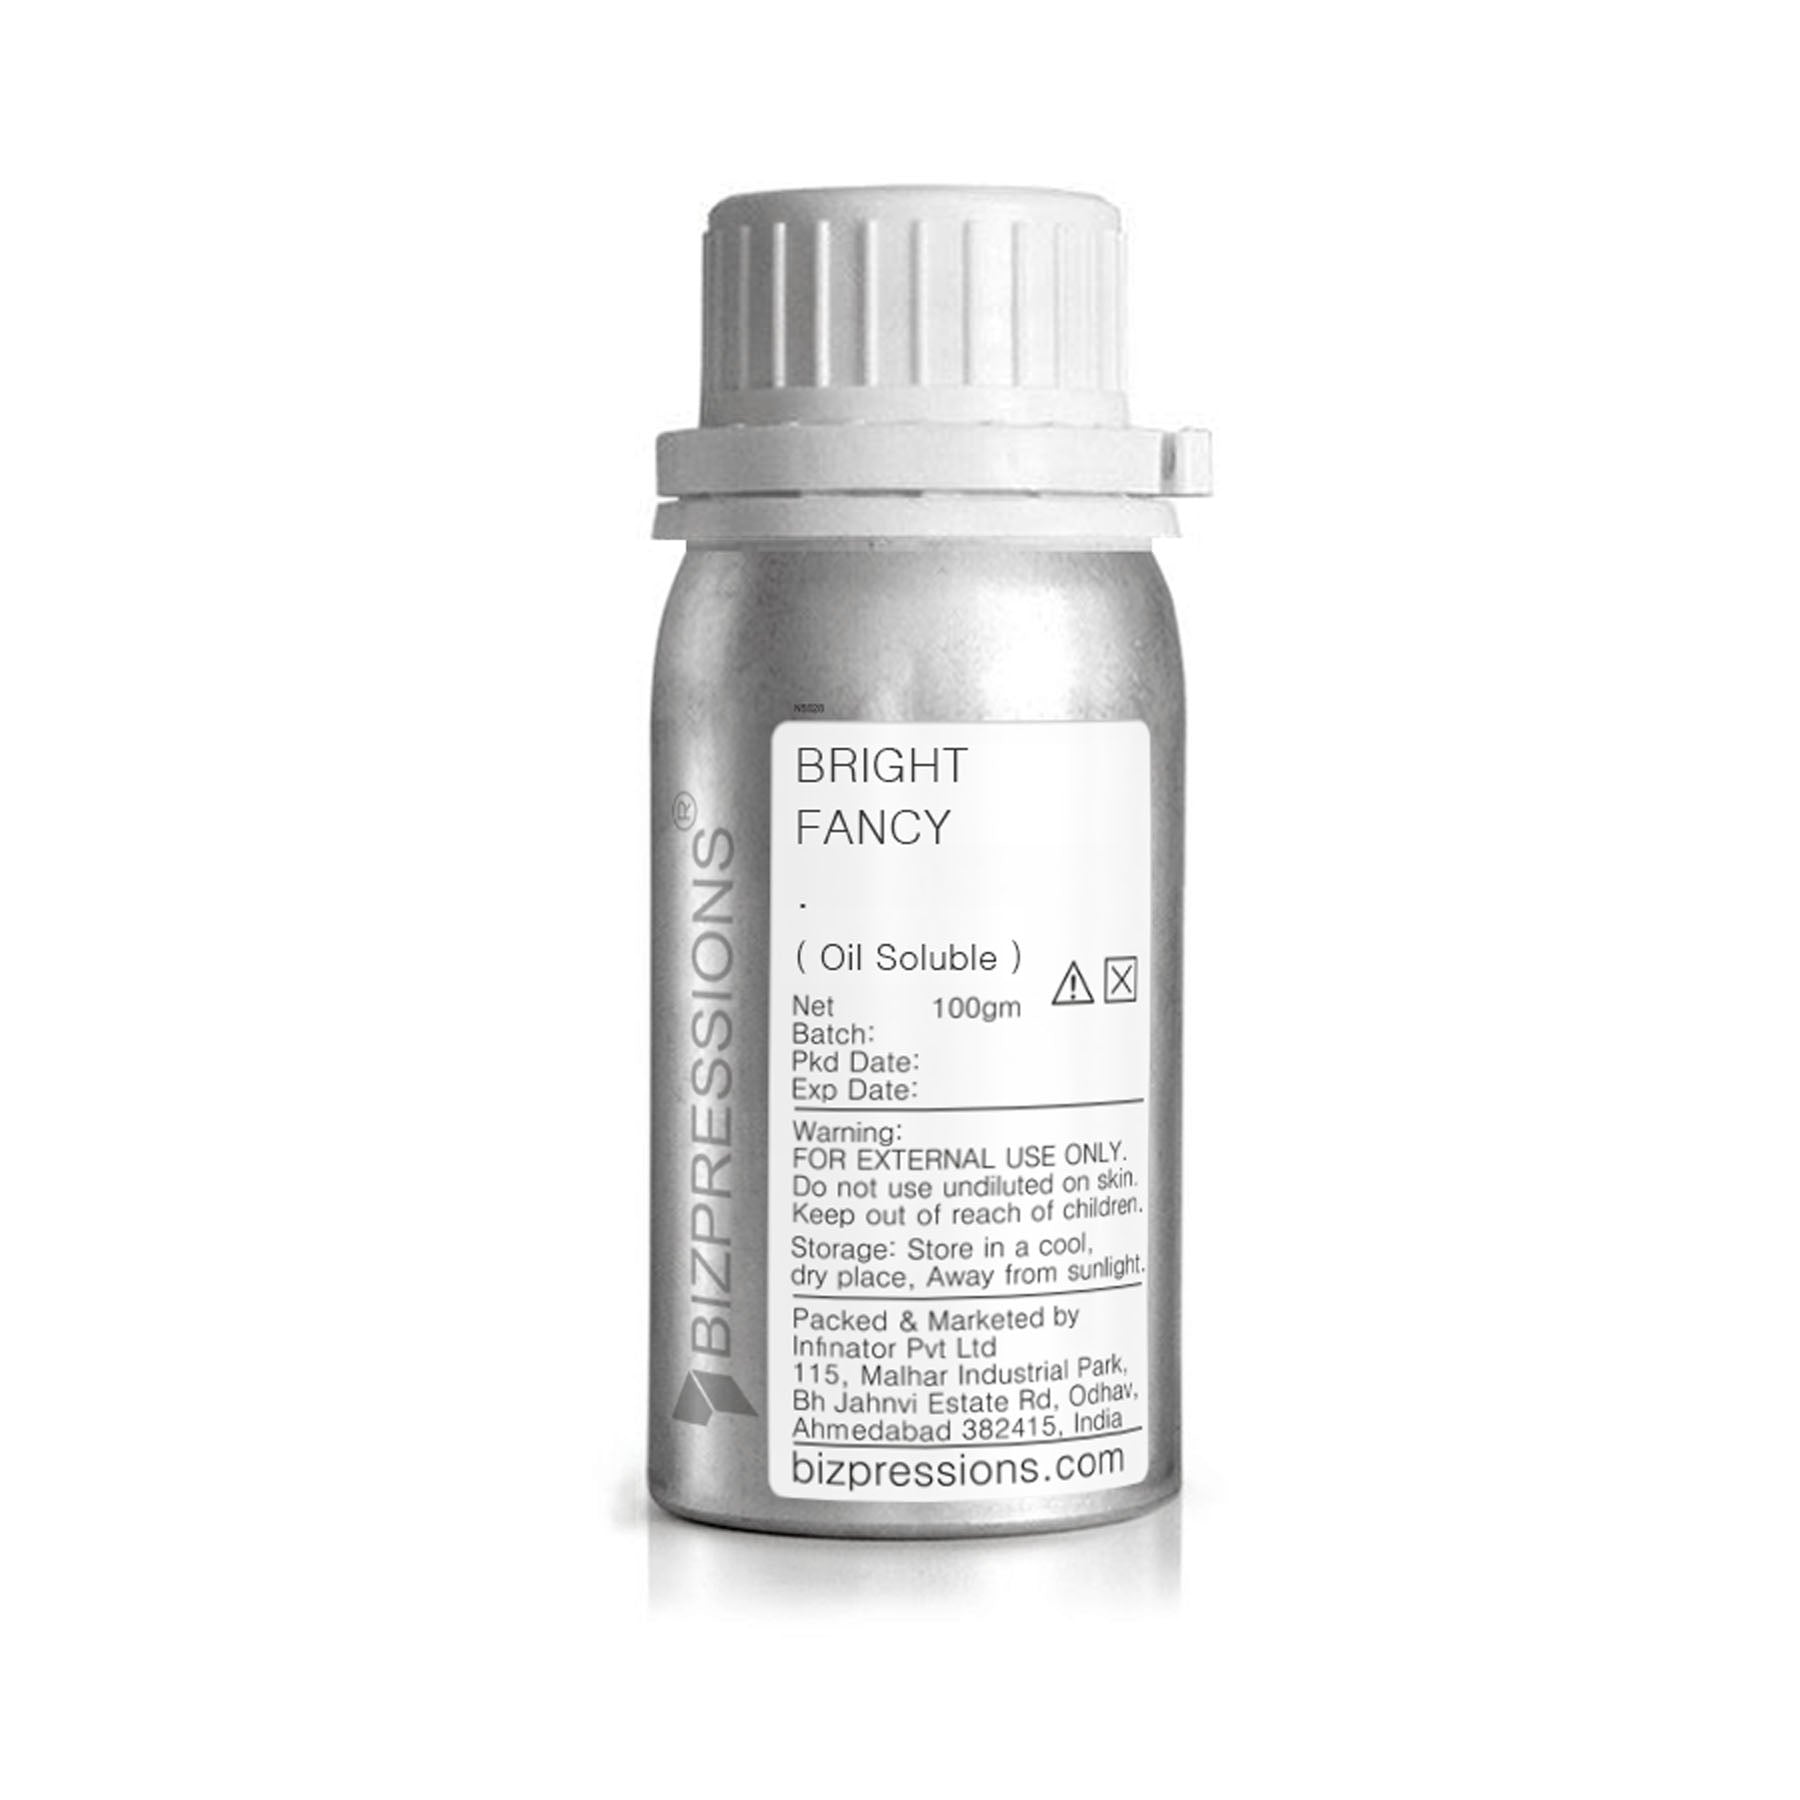 BRIGHT FANCY - Fragrance ( Oil Soluble ) - 100 gm